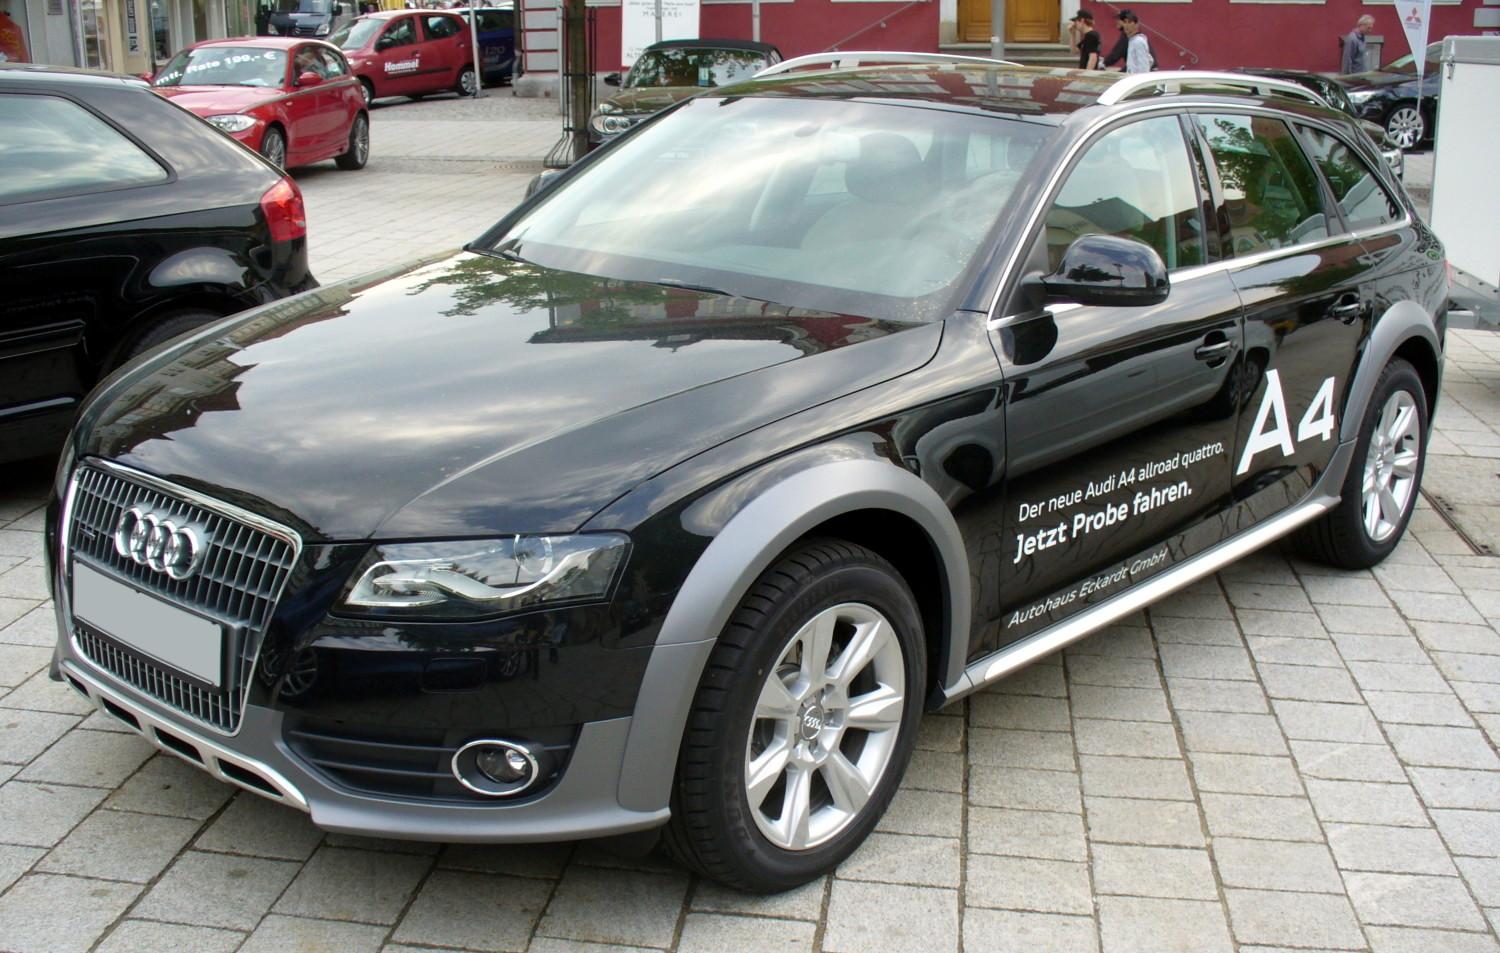 Audi a4 allroad test